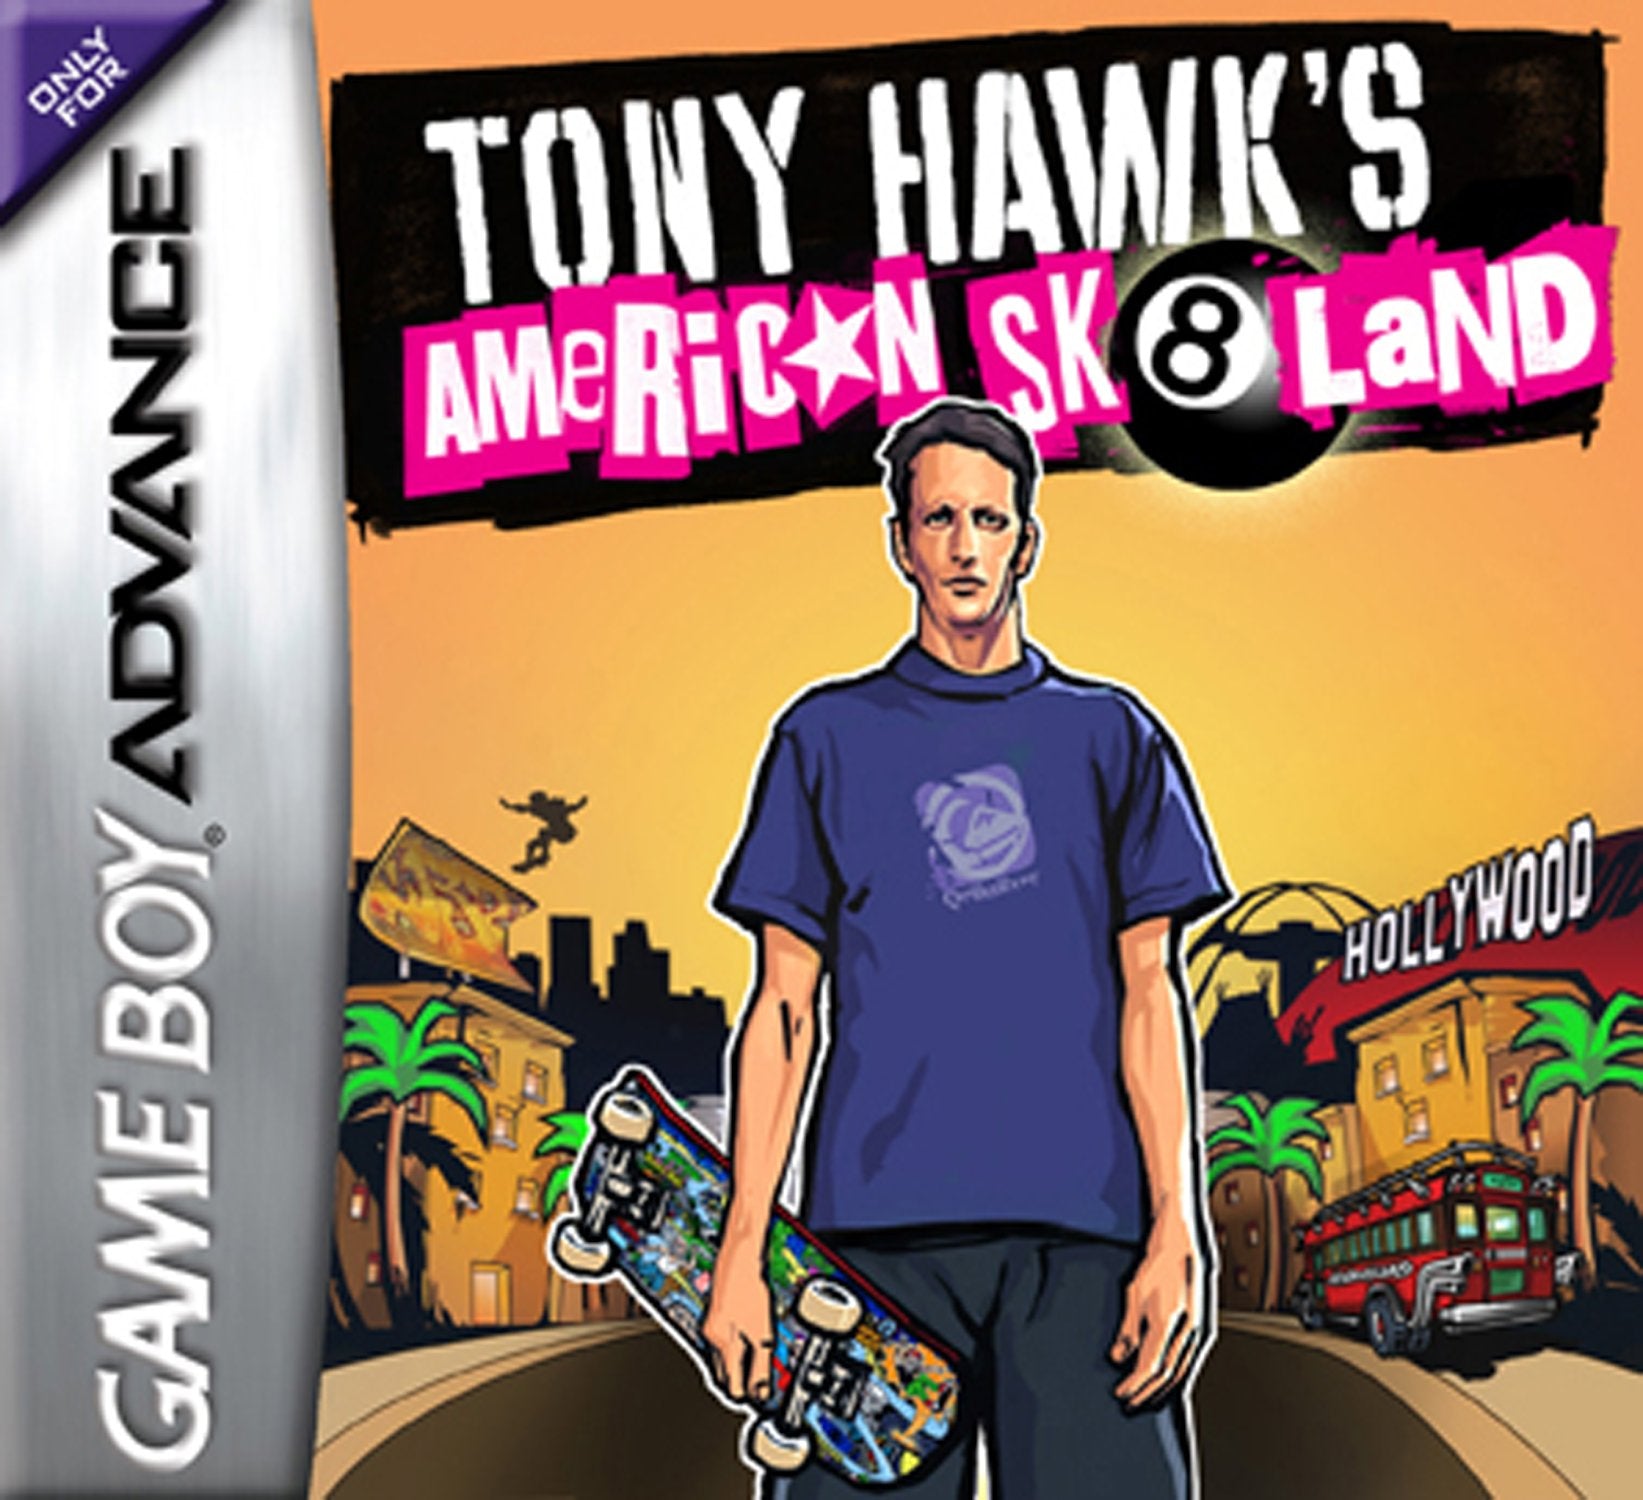 J2Games.com | Tony Hawk American Skateland (Gameboy Advance) (Pre-Played - Game Only).